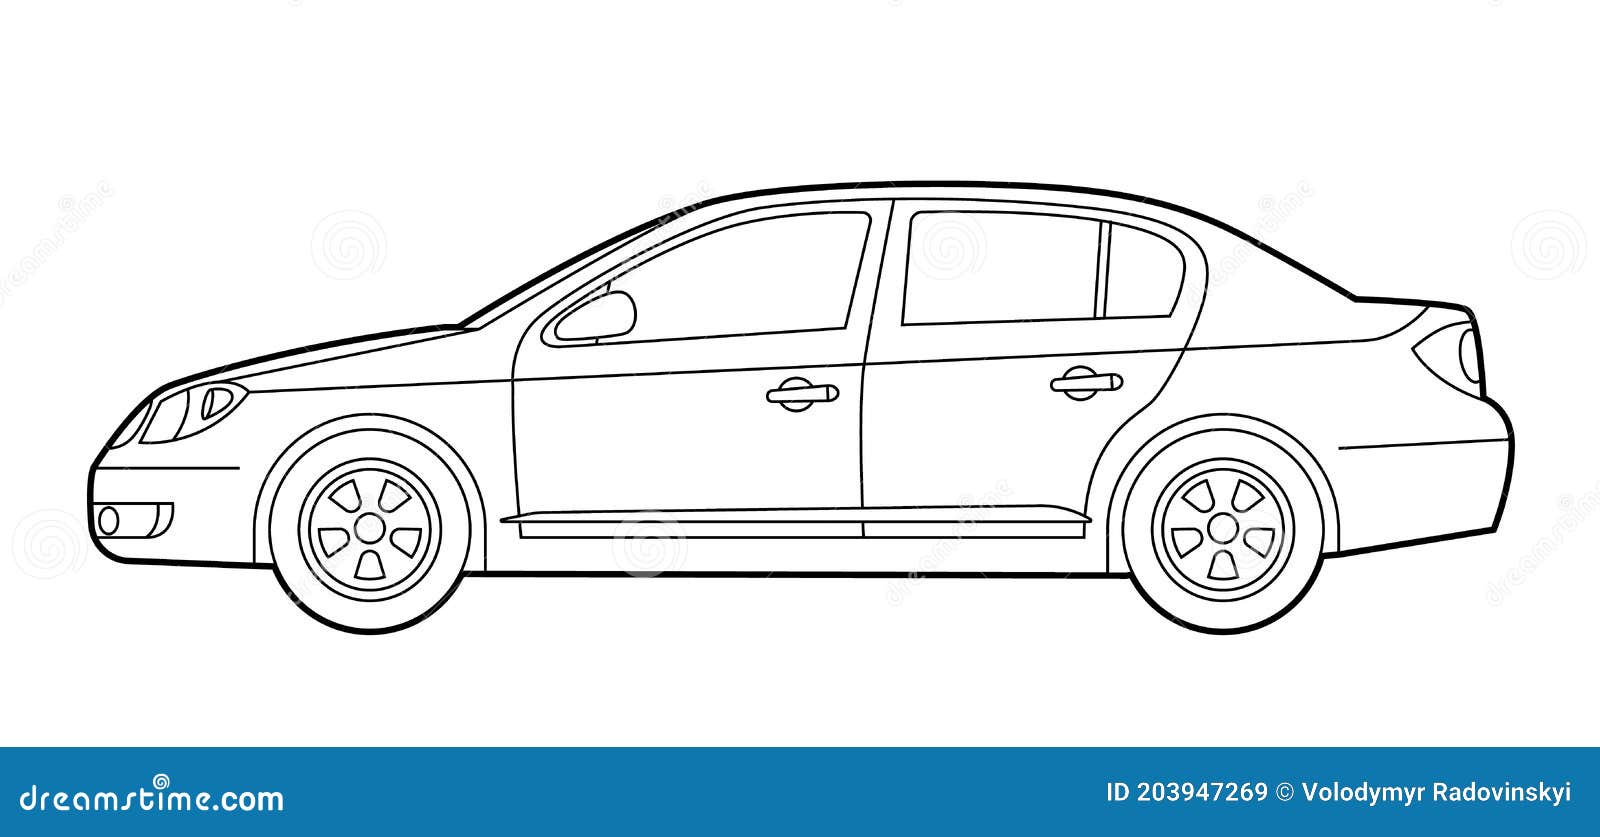 Car Drawing Stock Illustrations – 97,650 Car Drawing Stock ...